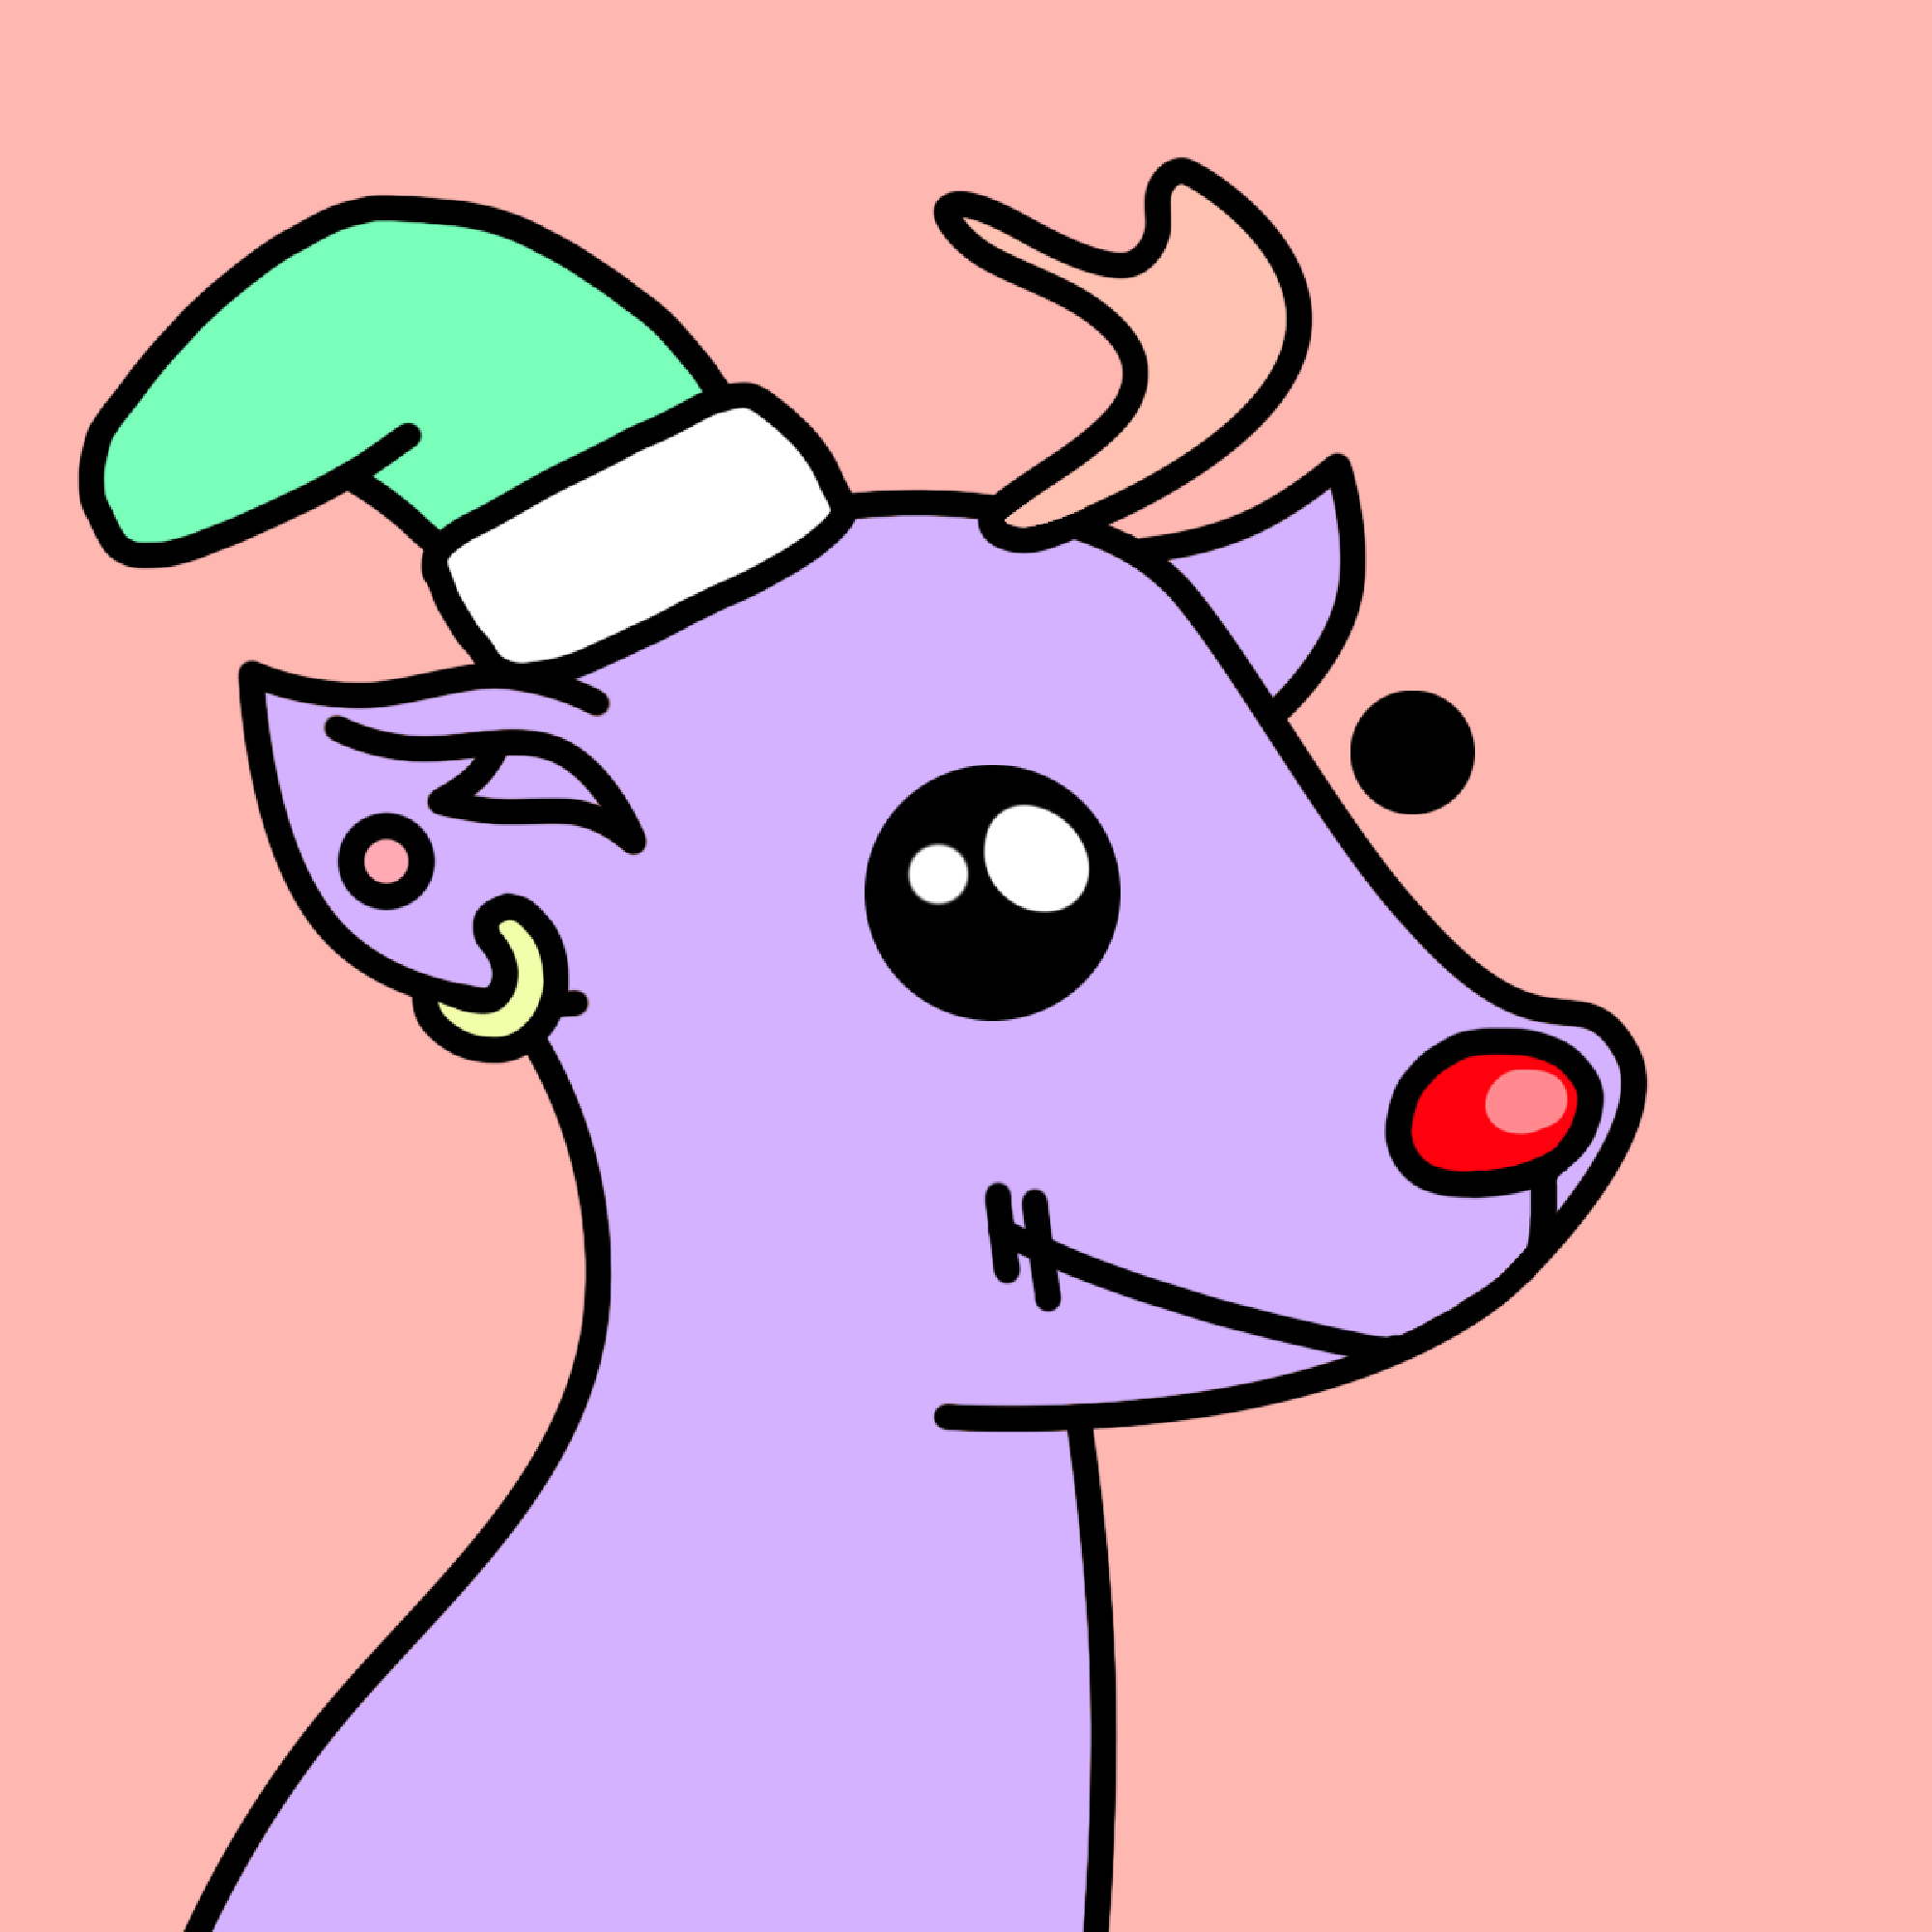 Doodled Deer#2627